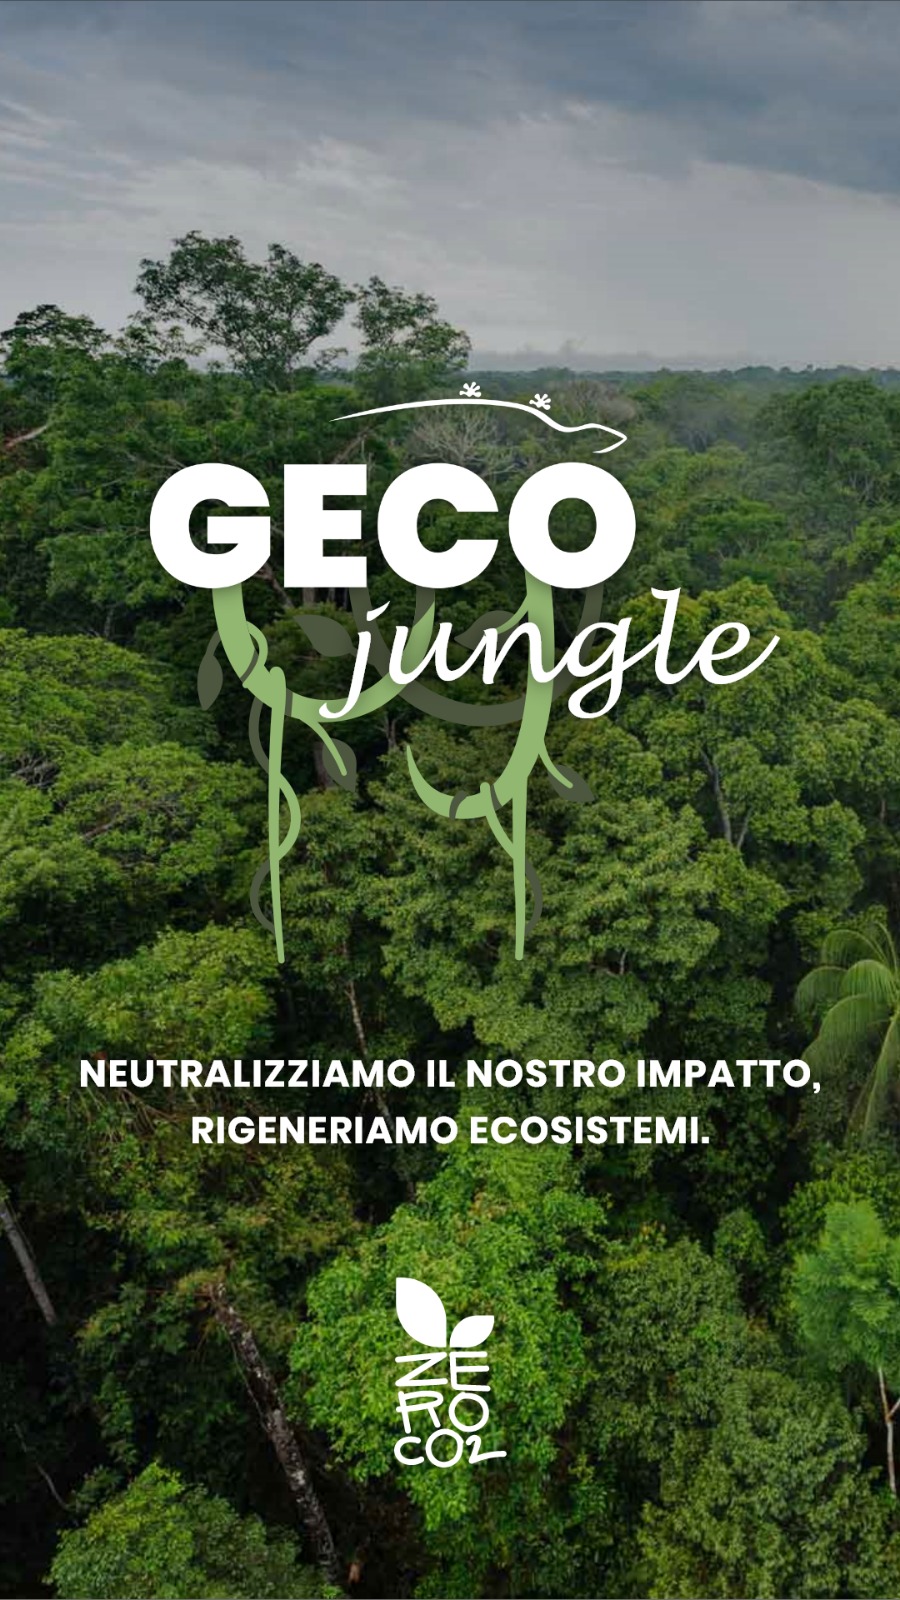 Jungle Zero CO2 - flamuri zyrtar tematik i 'GECO Expo' 2022